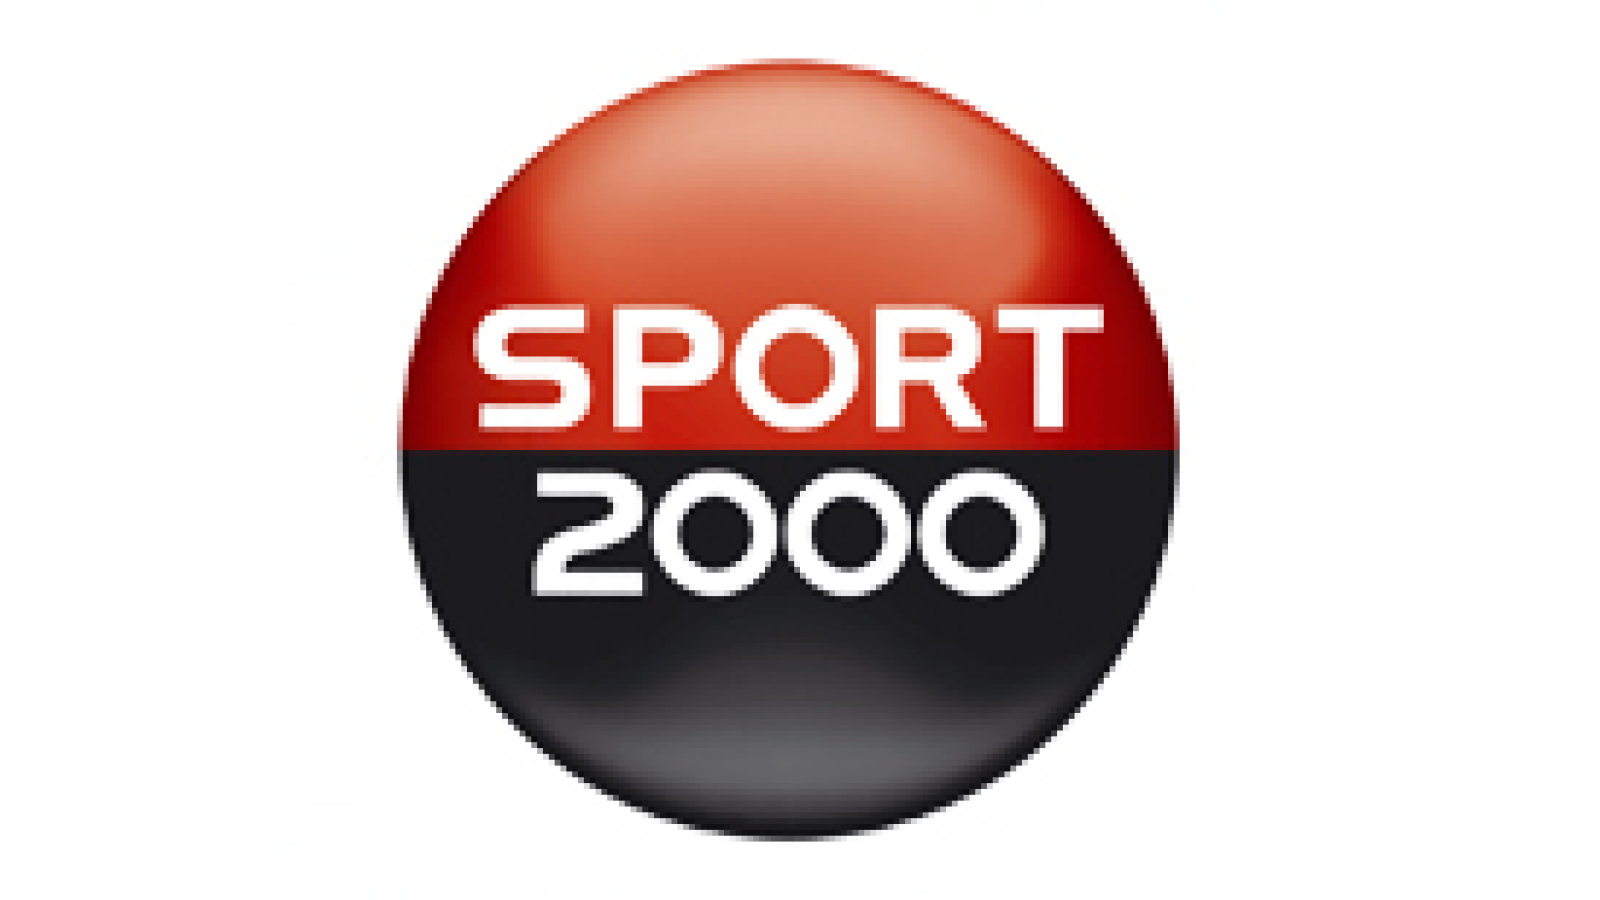 Sport 2000 - 1650 Kevin sport